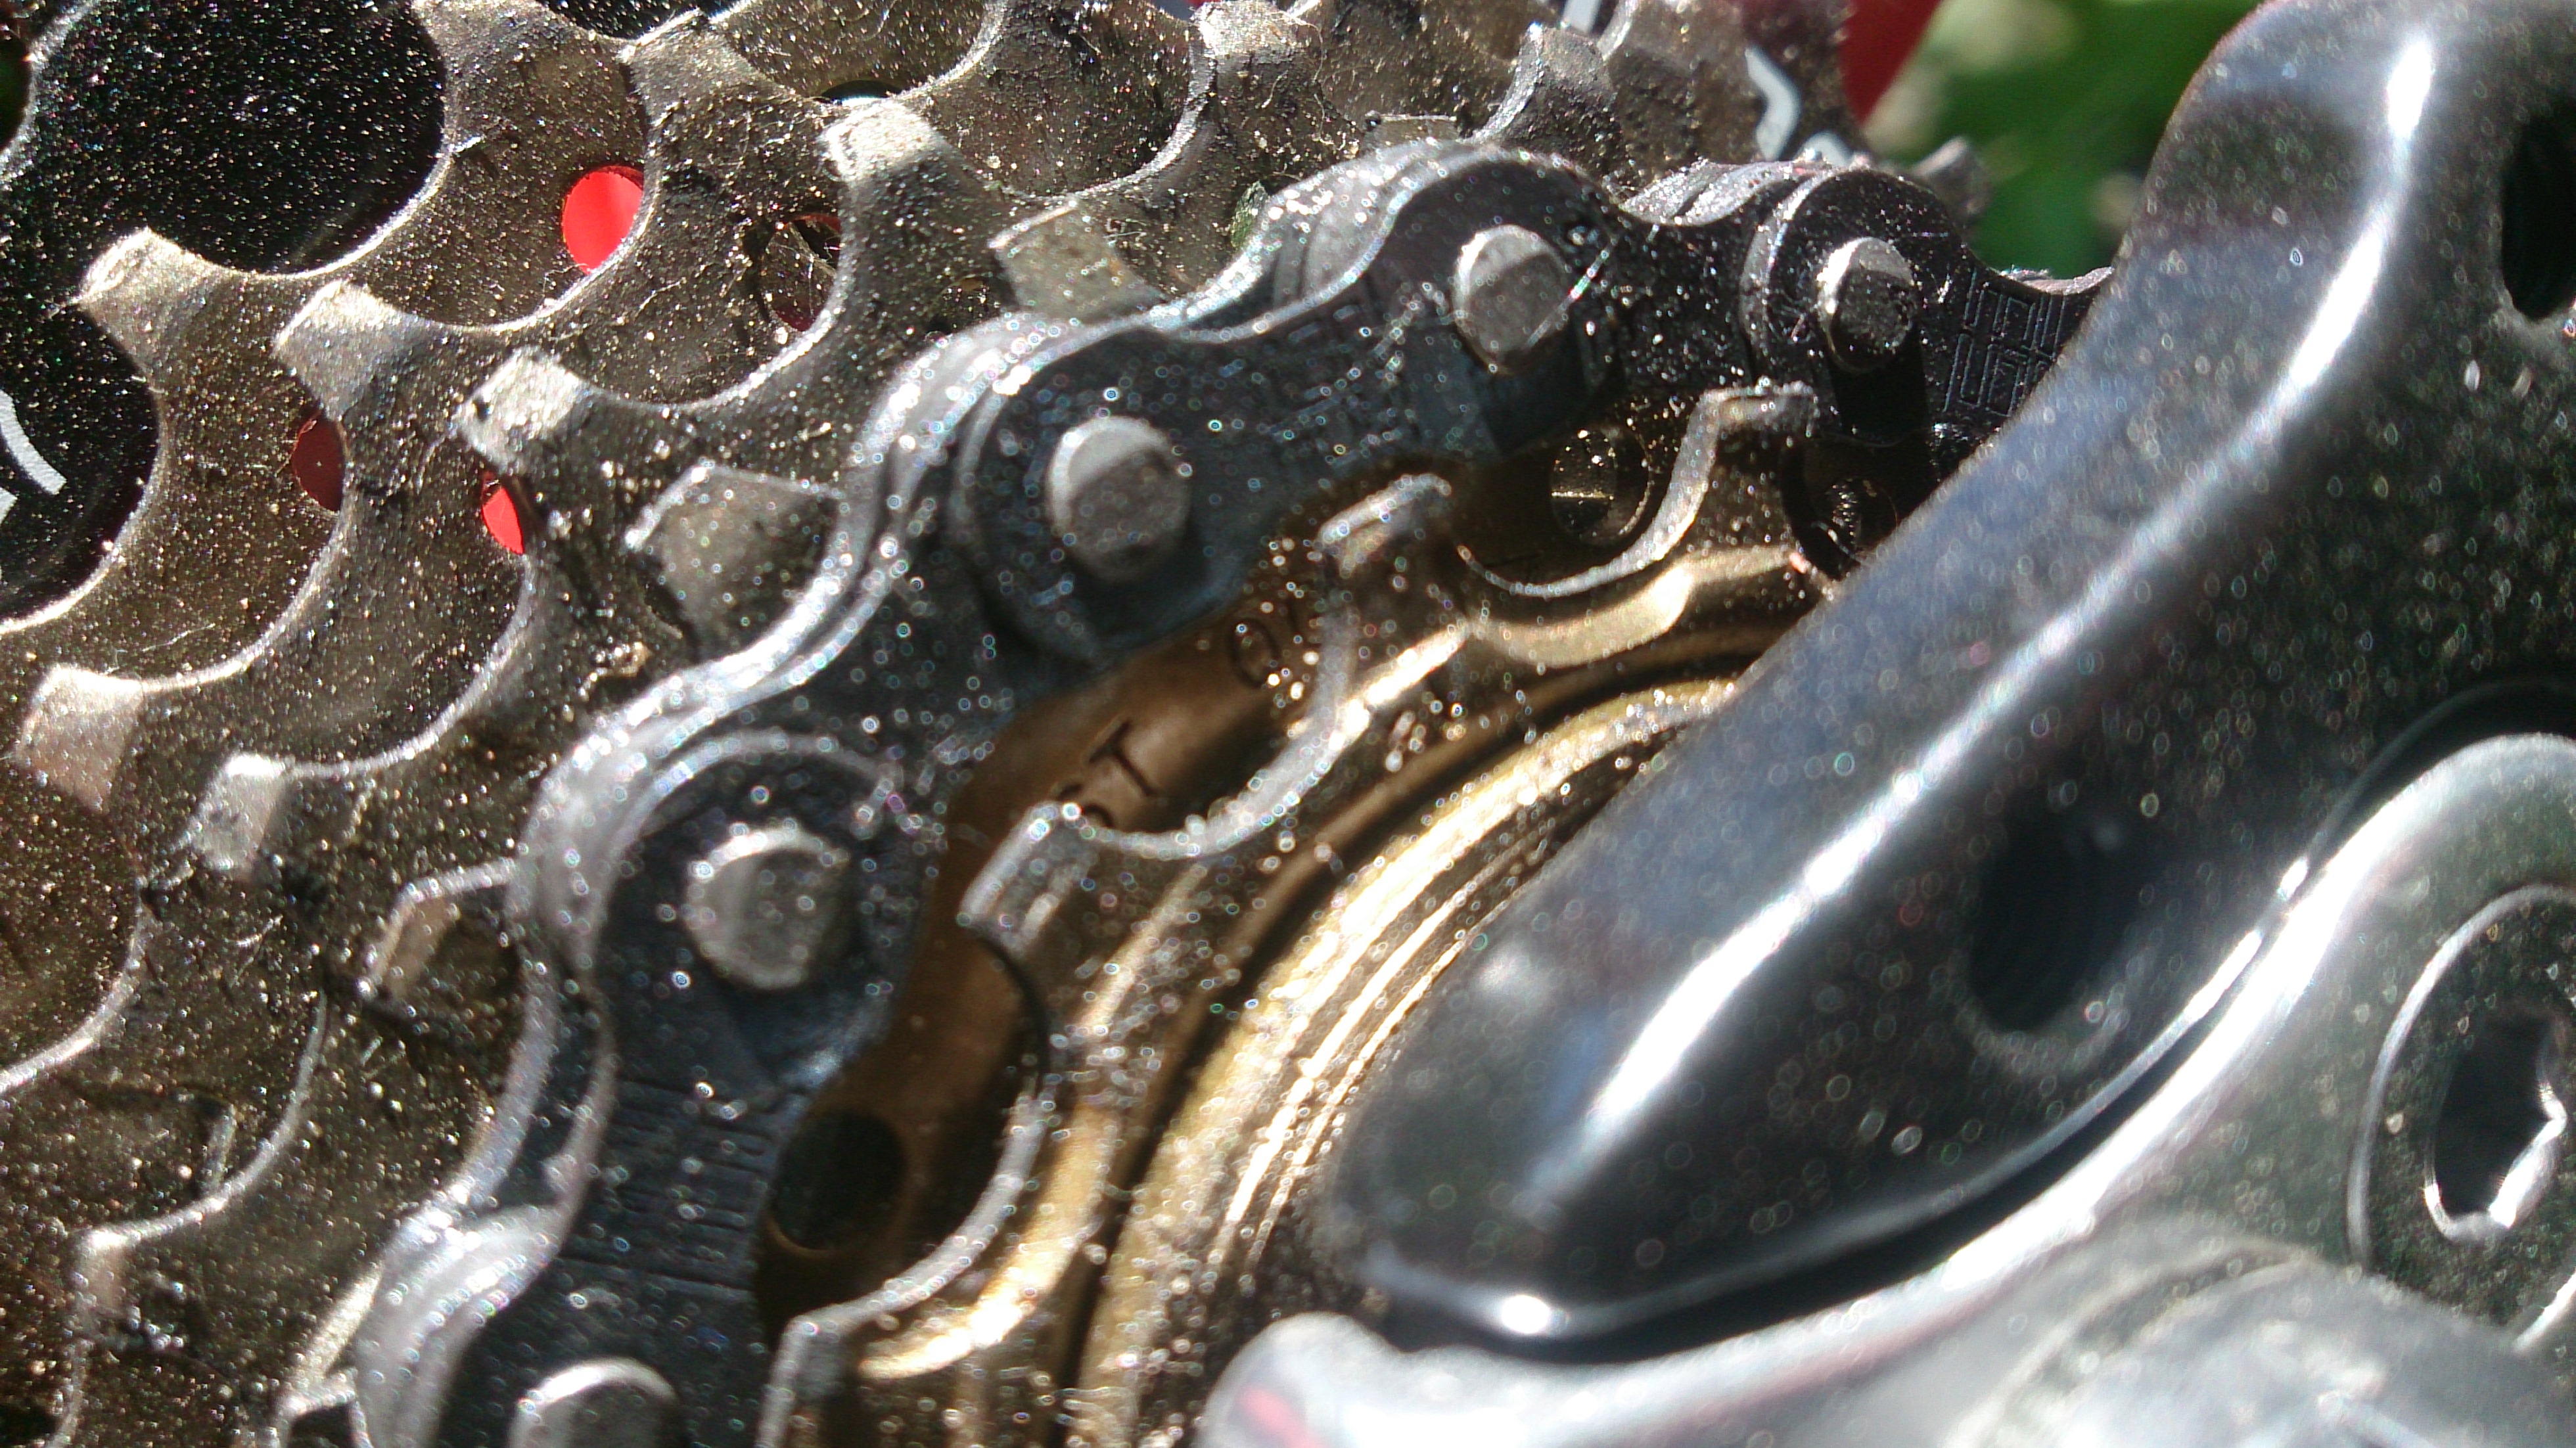 General 3920x2204 gears metal vehicle bicycle bicycle chain